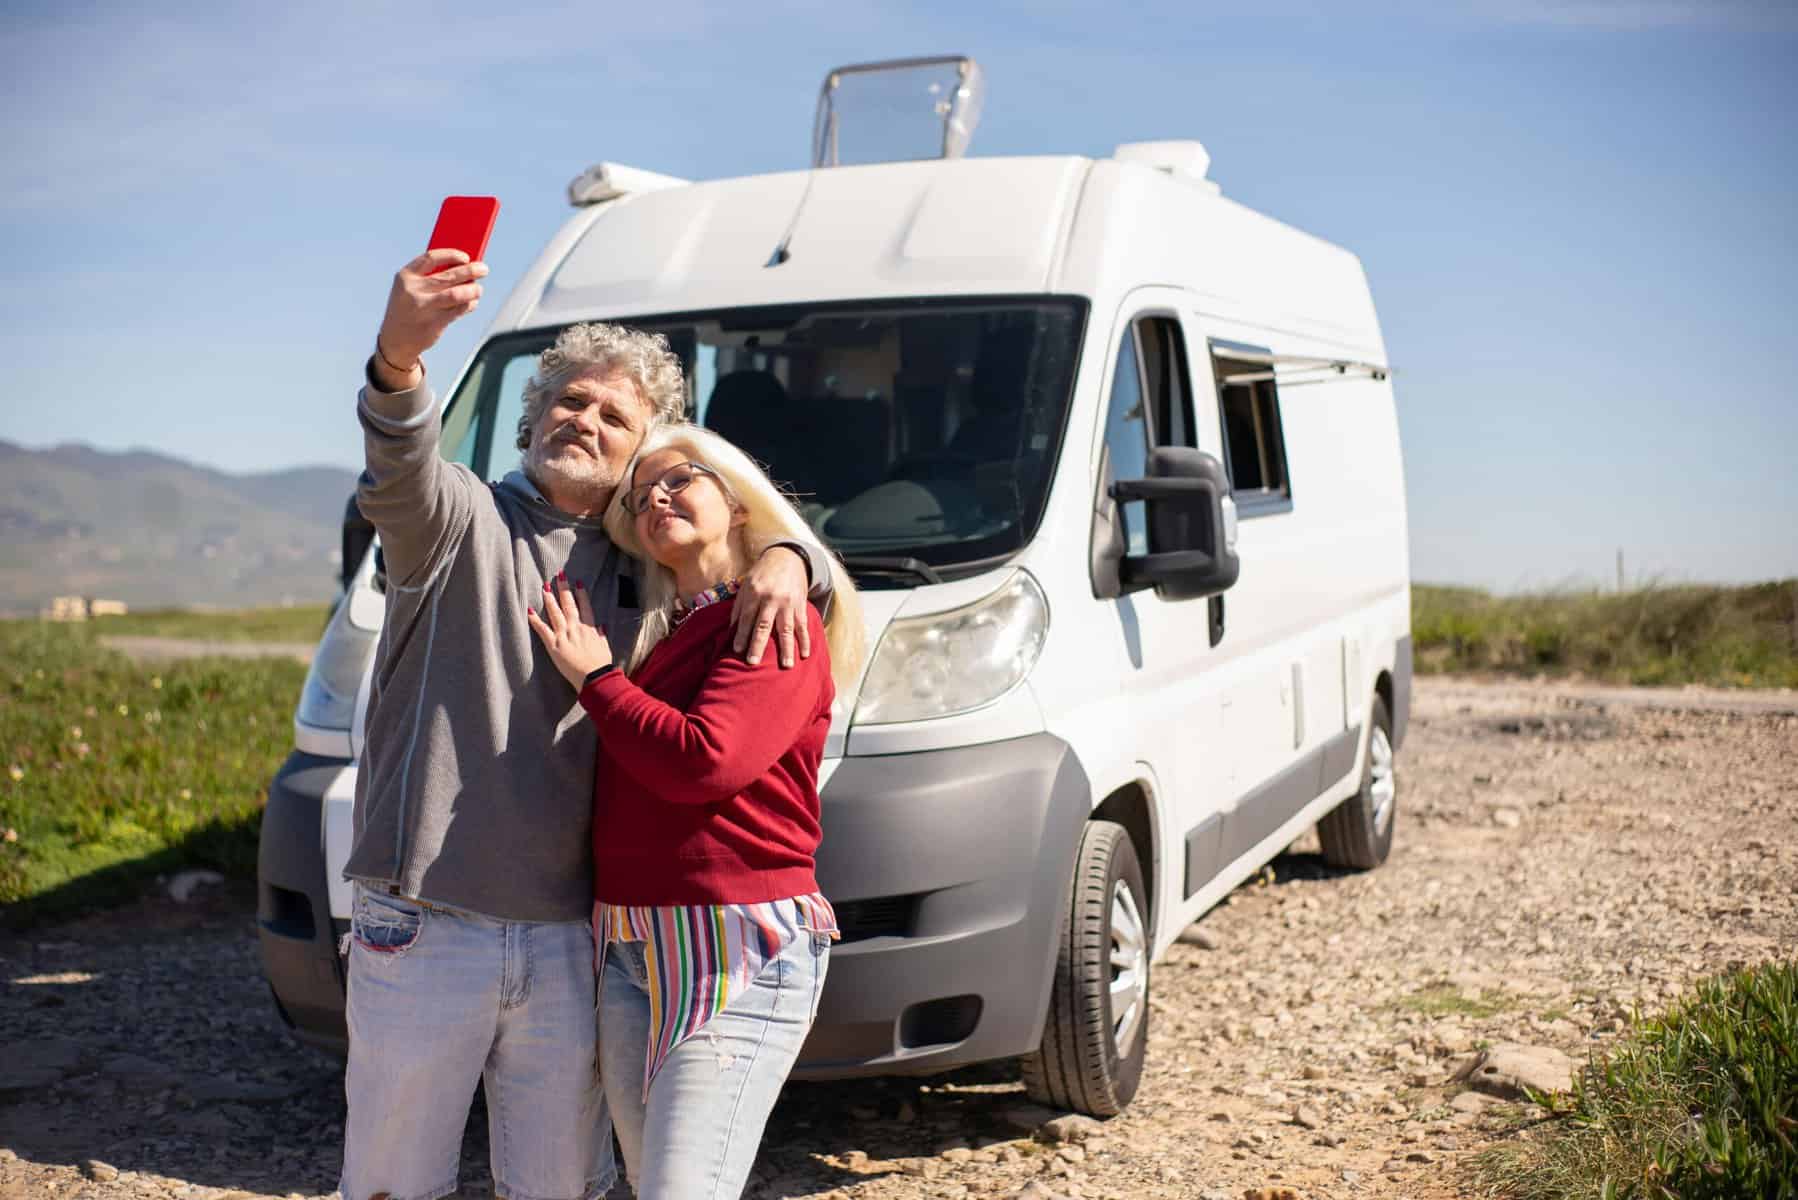 Senior couple with campervan taking selfie (Image: Krampus Productions, Pexels.com)